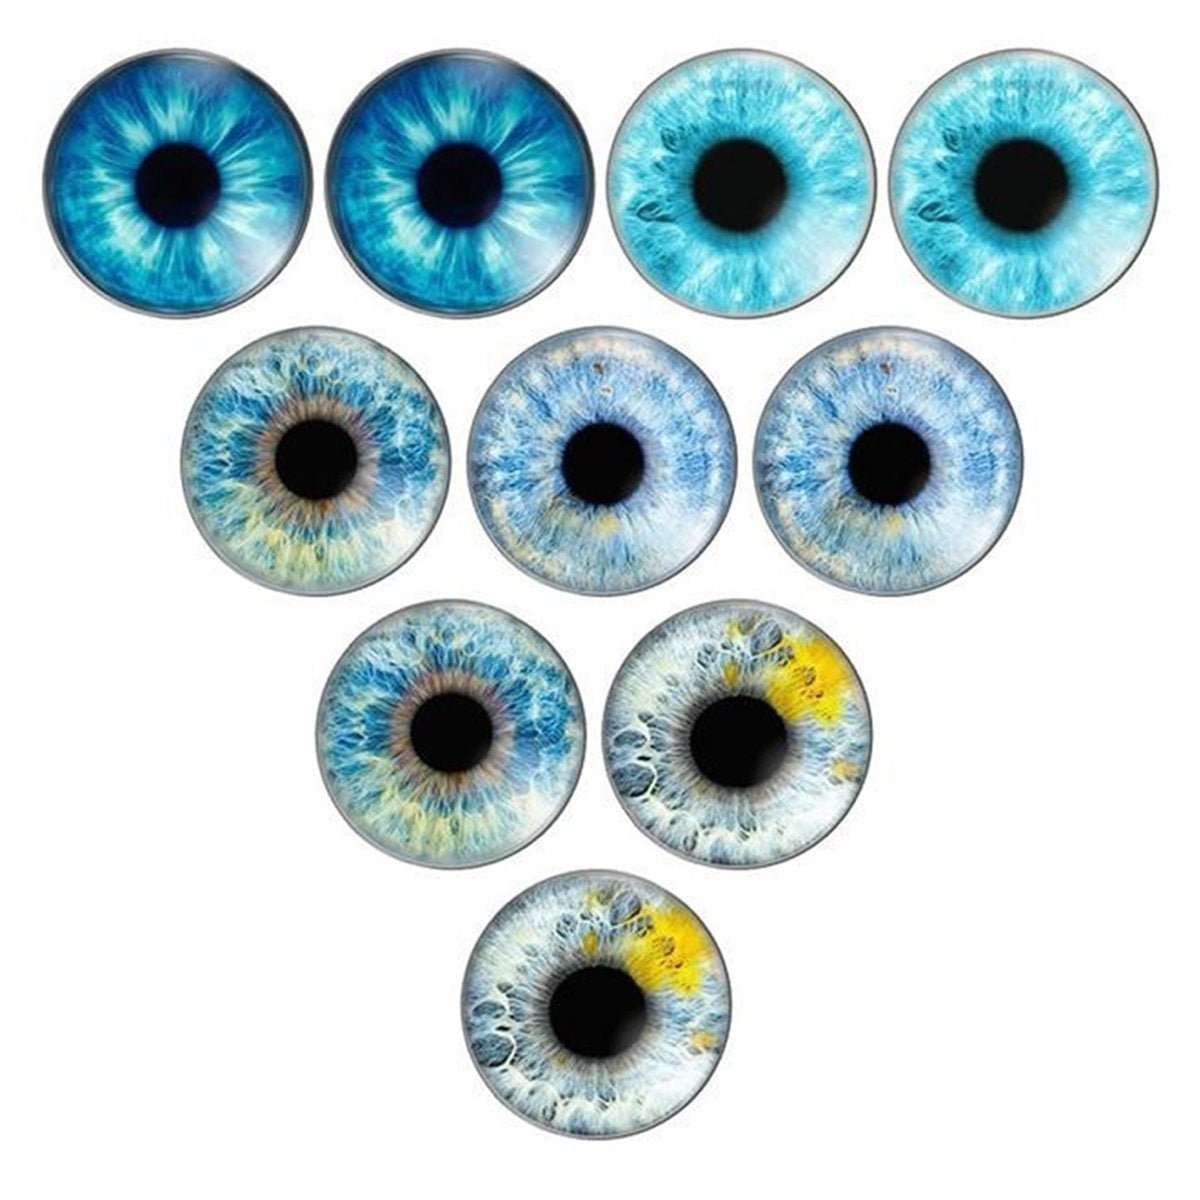 10pcs Round Pupil Glass Eyes 8-25mm Eye Cabochon Charms Cabochon Pattern Crafts - Set 2 8mm - - Asia Sell